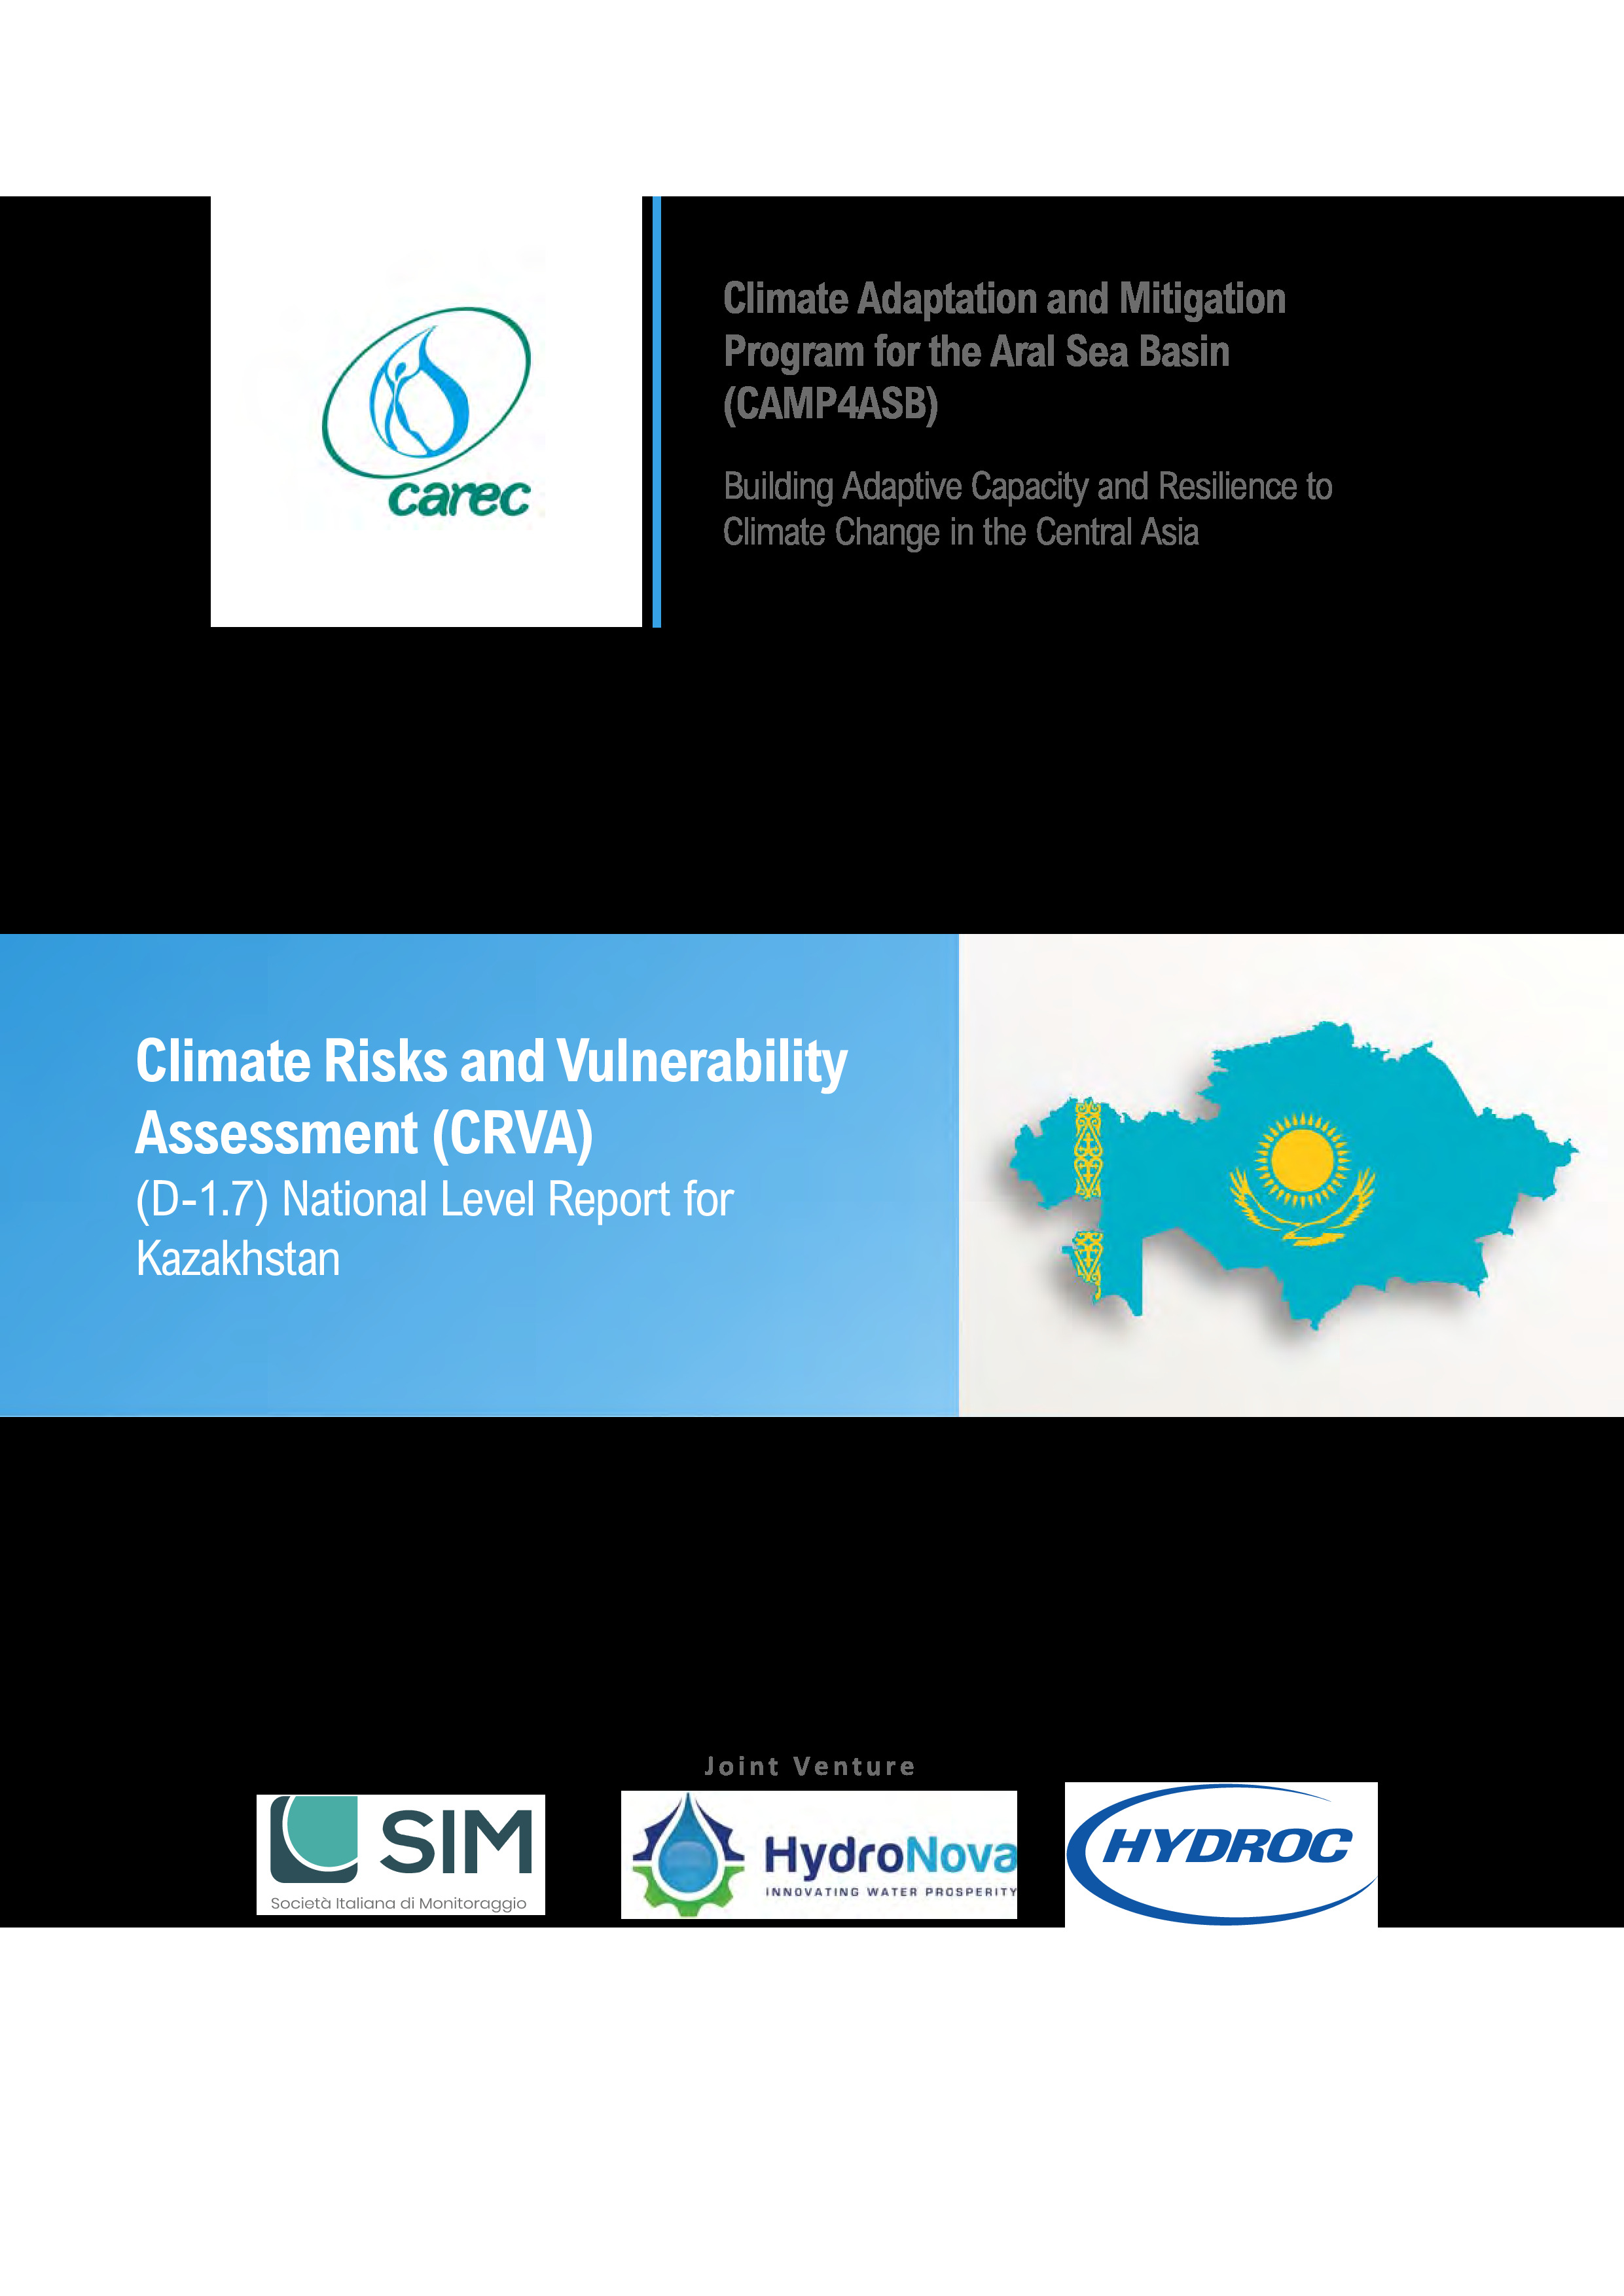 Climate risks and vulnerability assessment (CRVA). National level report for Kazakhstan, 2021